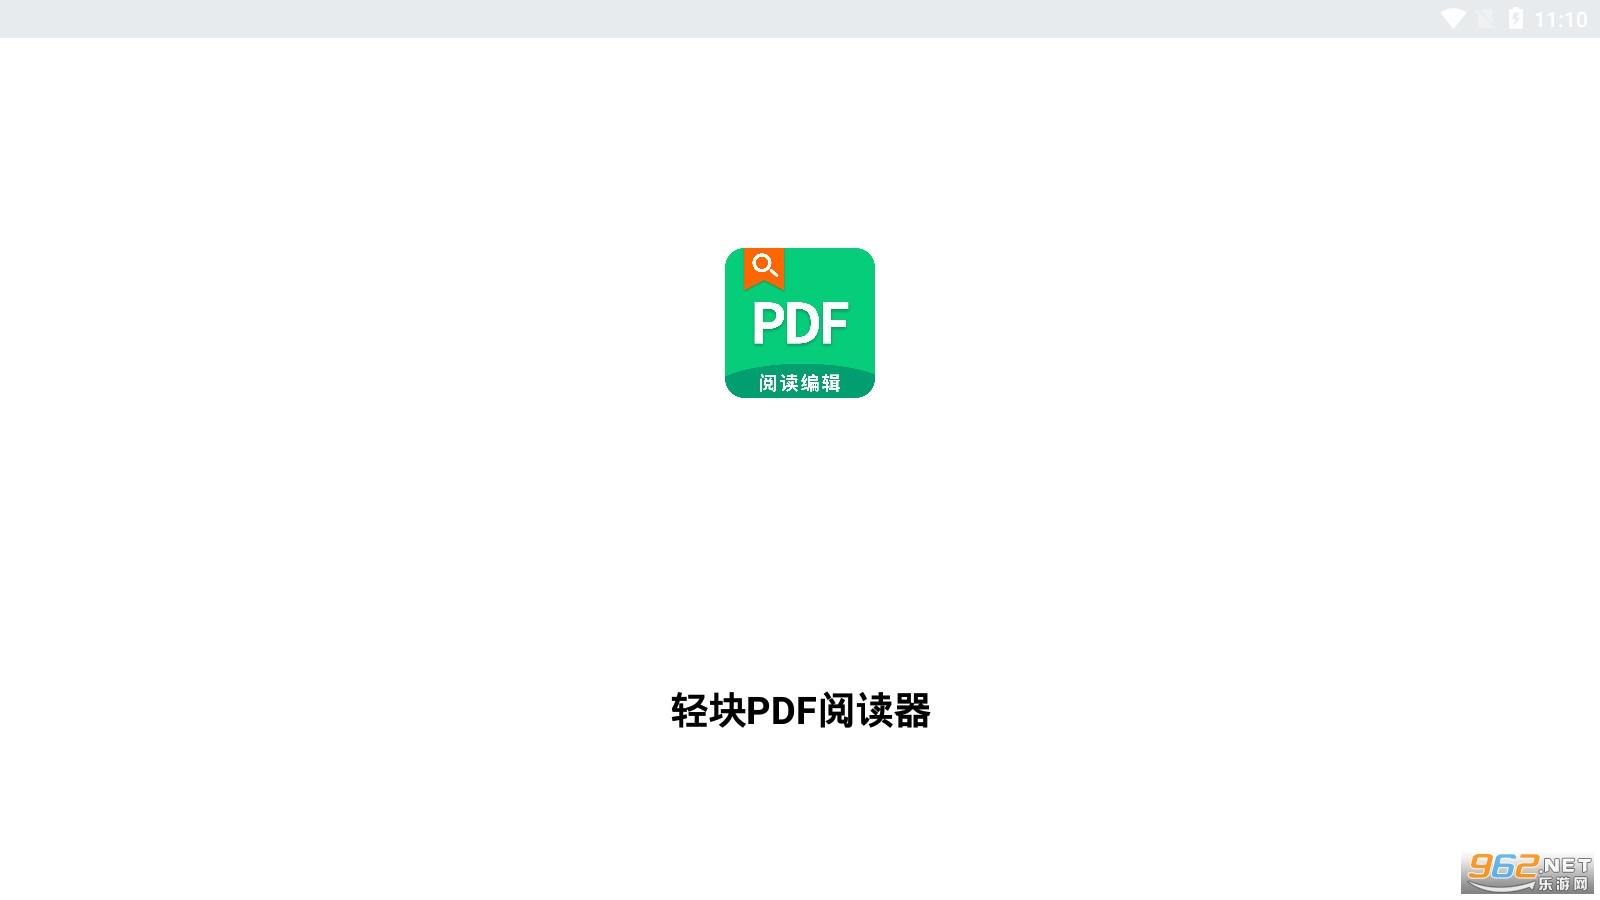 轻块PDF阅读器 V1.0.0 安卓版